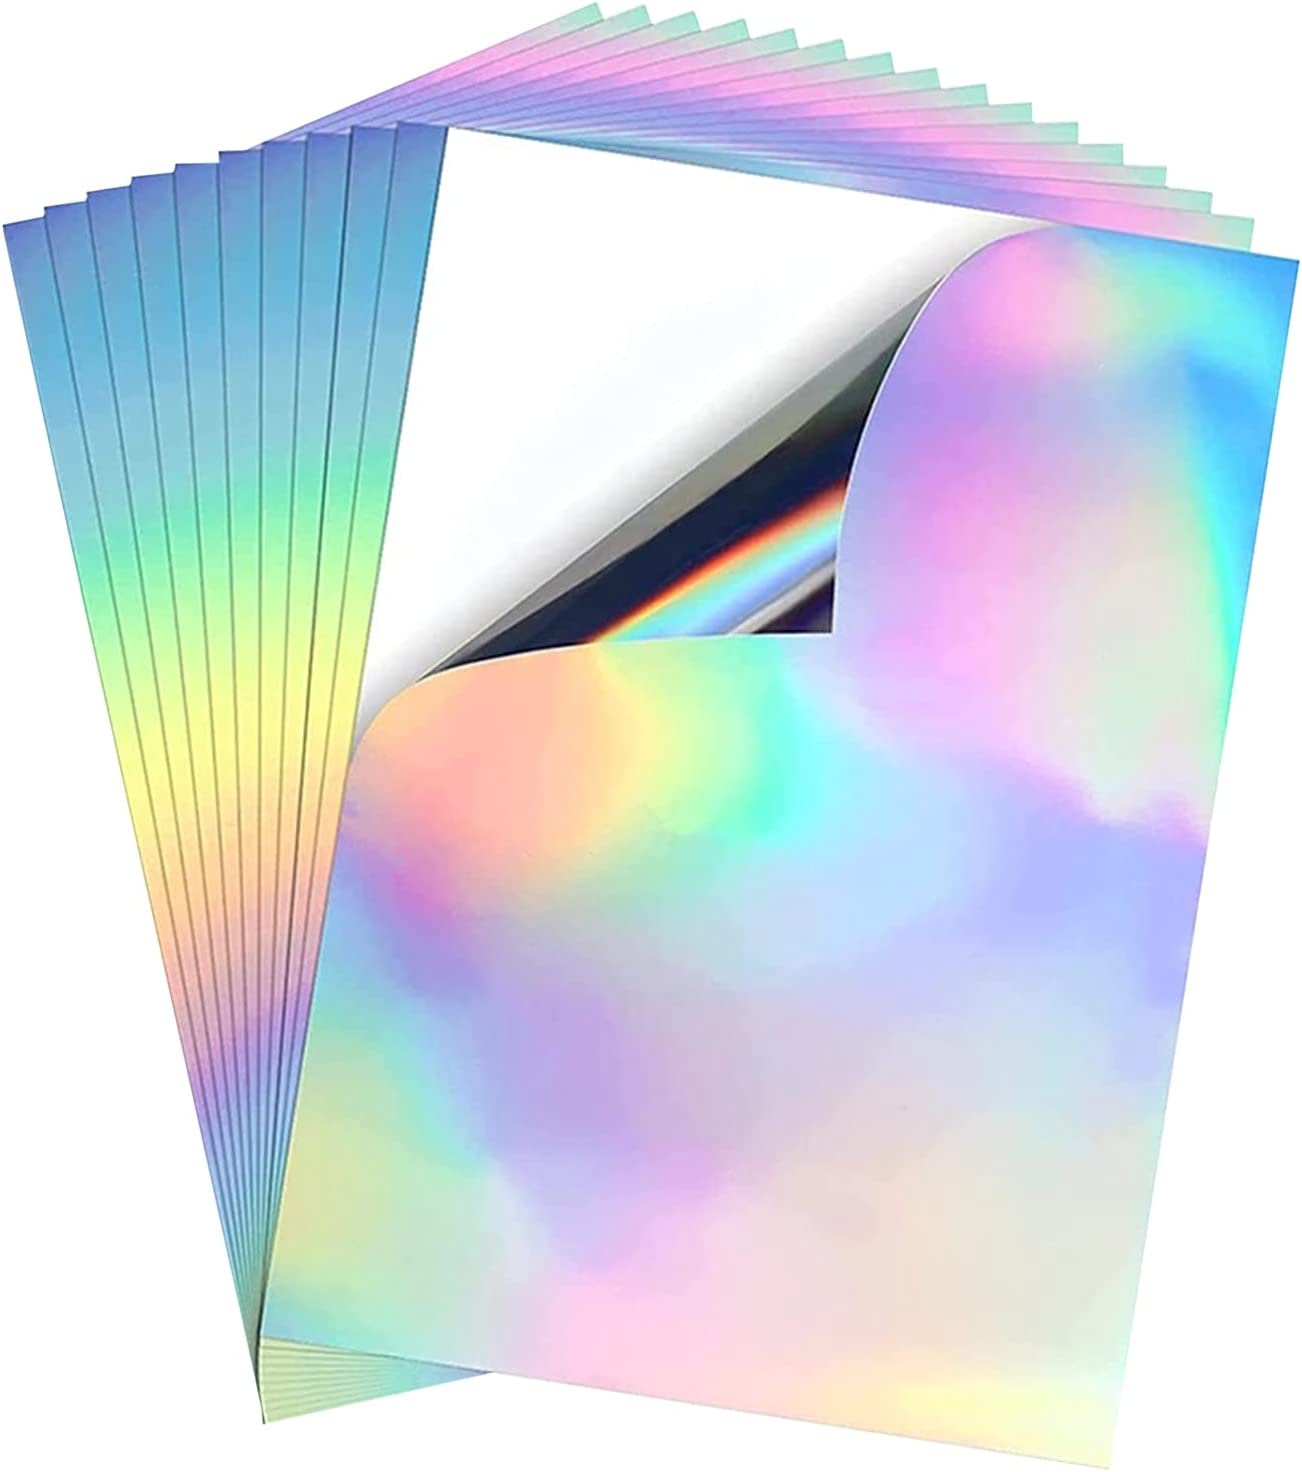 10 Sheets Premium Vinyl Sticker Film A4 Holographic Printable Vinyl Sticker Paper Rainbow Vinyl Sticker Paper Waterproof Sticker Paper For Inkjet Laser Printer Amazon de Stationery Office Supplies